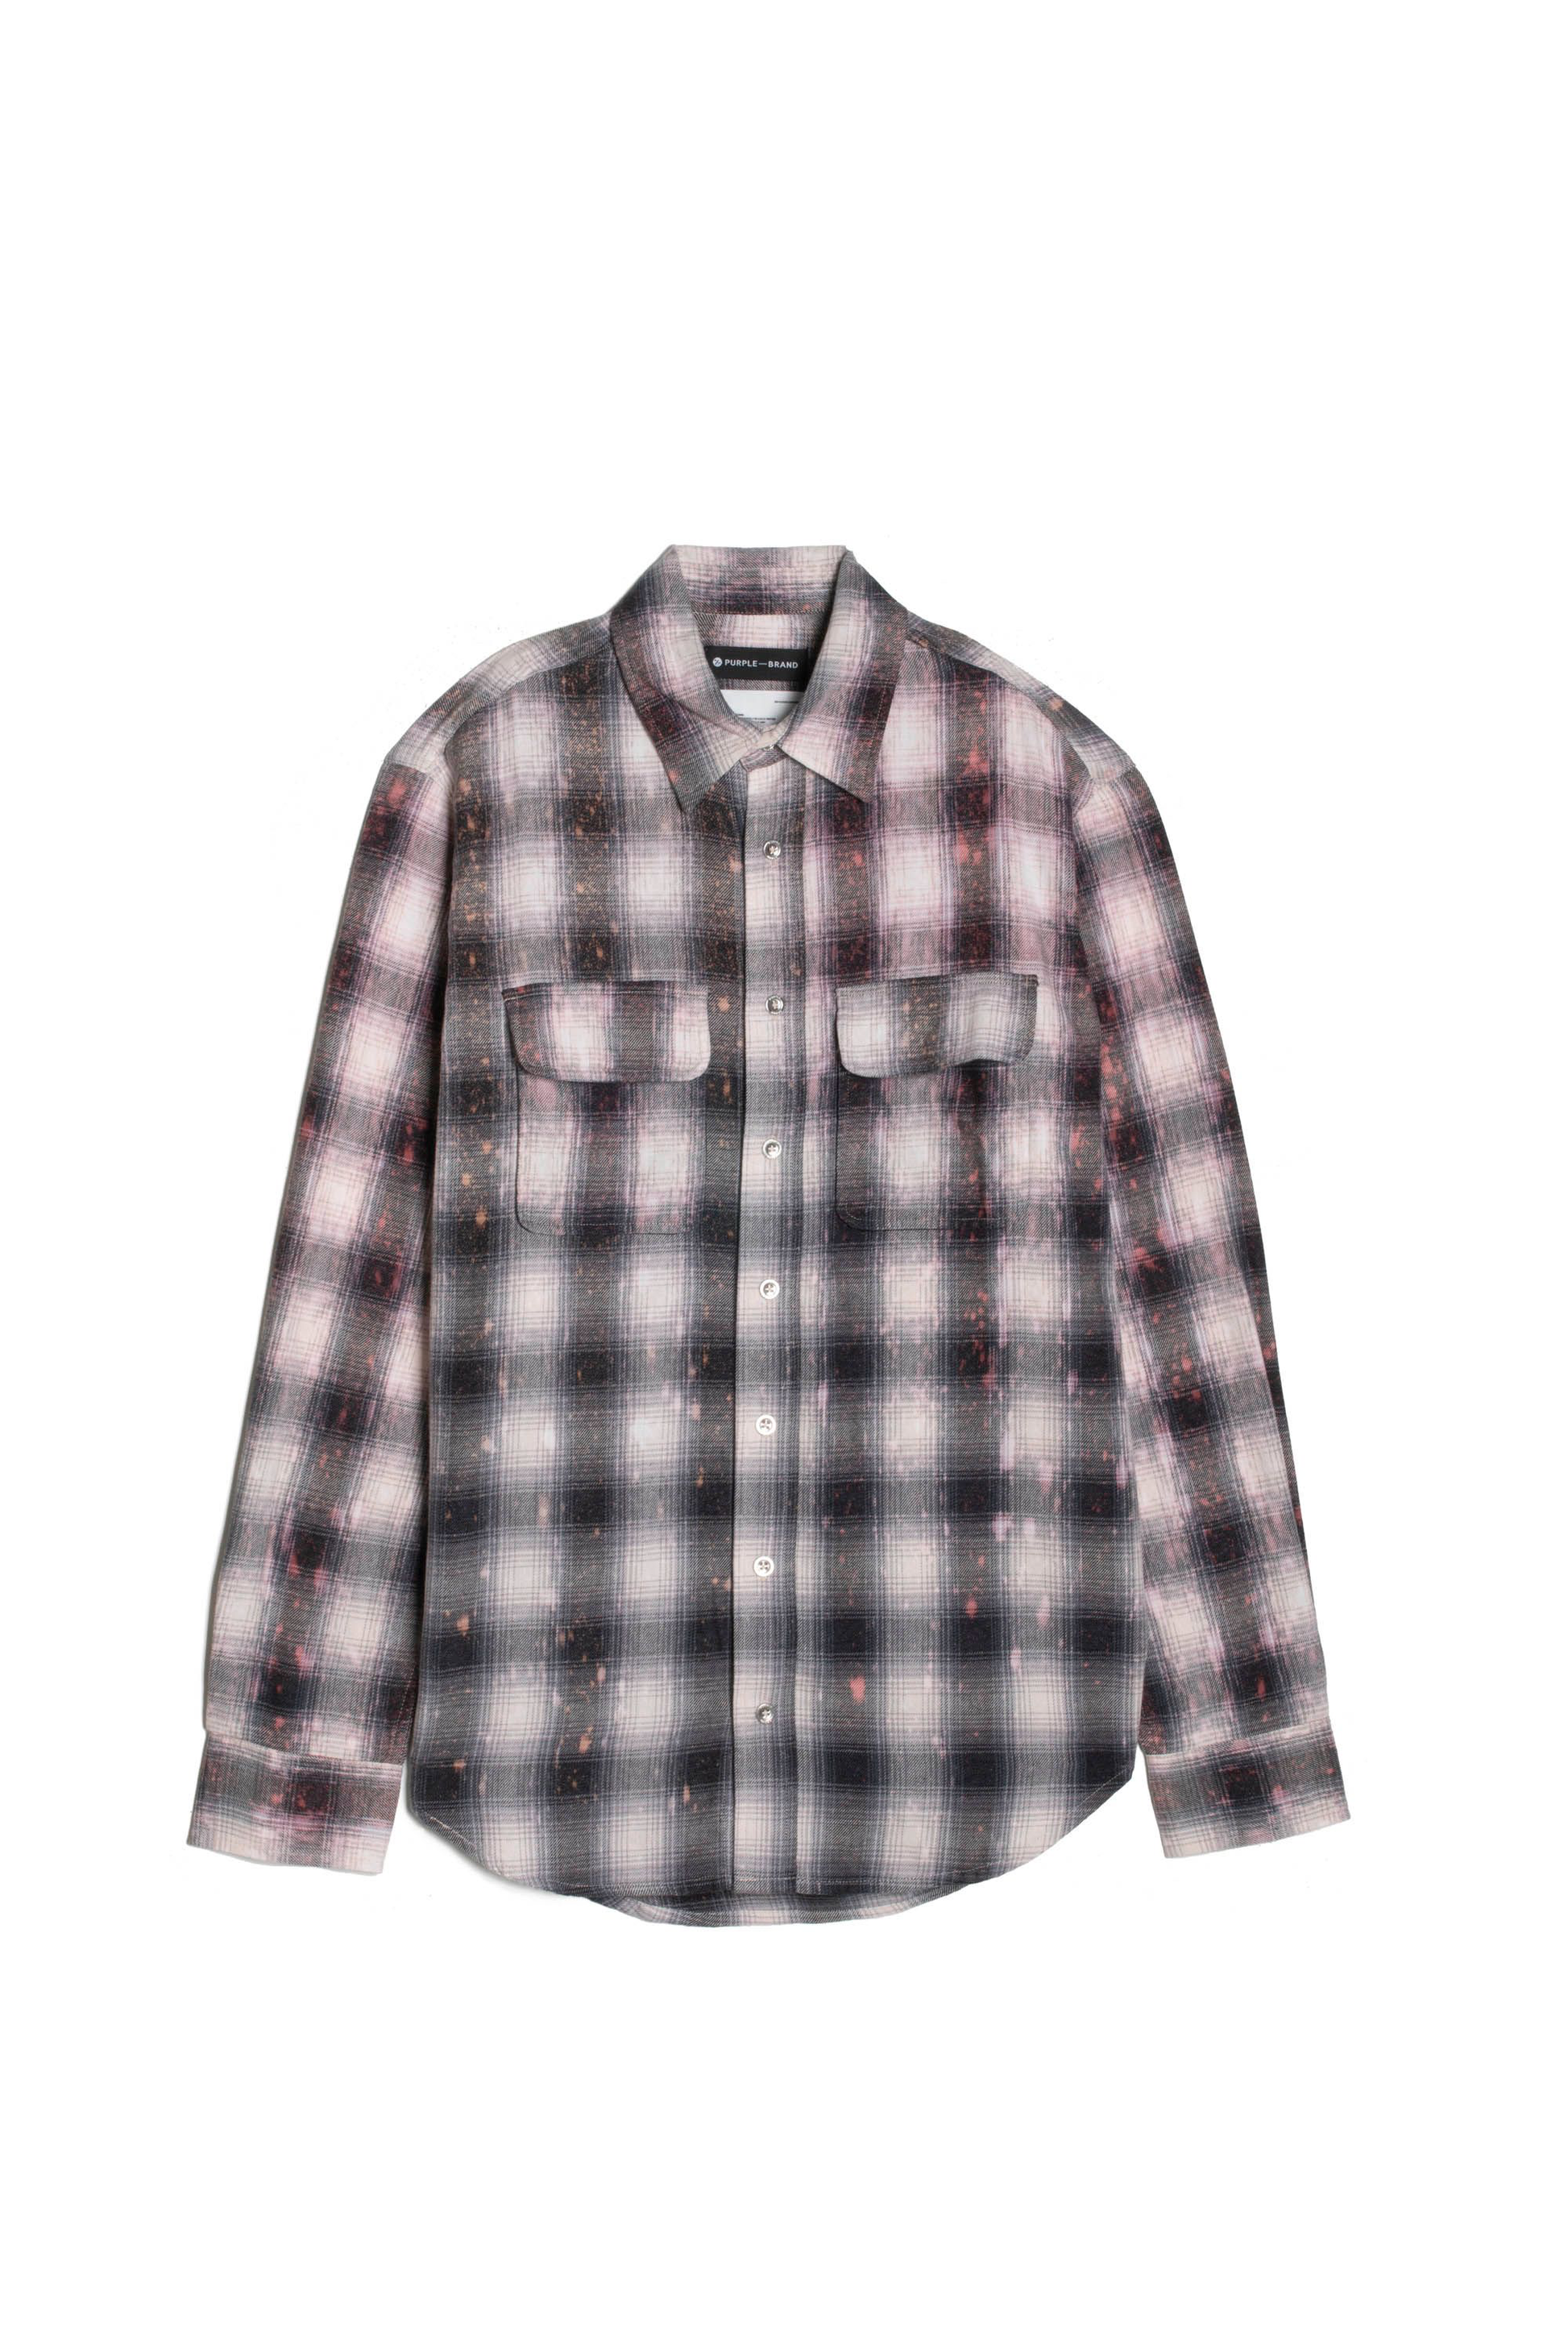 PURPLE BRAND - Men's Long Sleeve Shirt - Style No. P303 - Flannel Shirt - Front